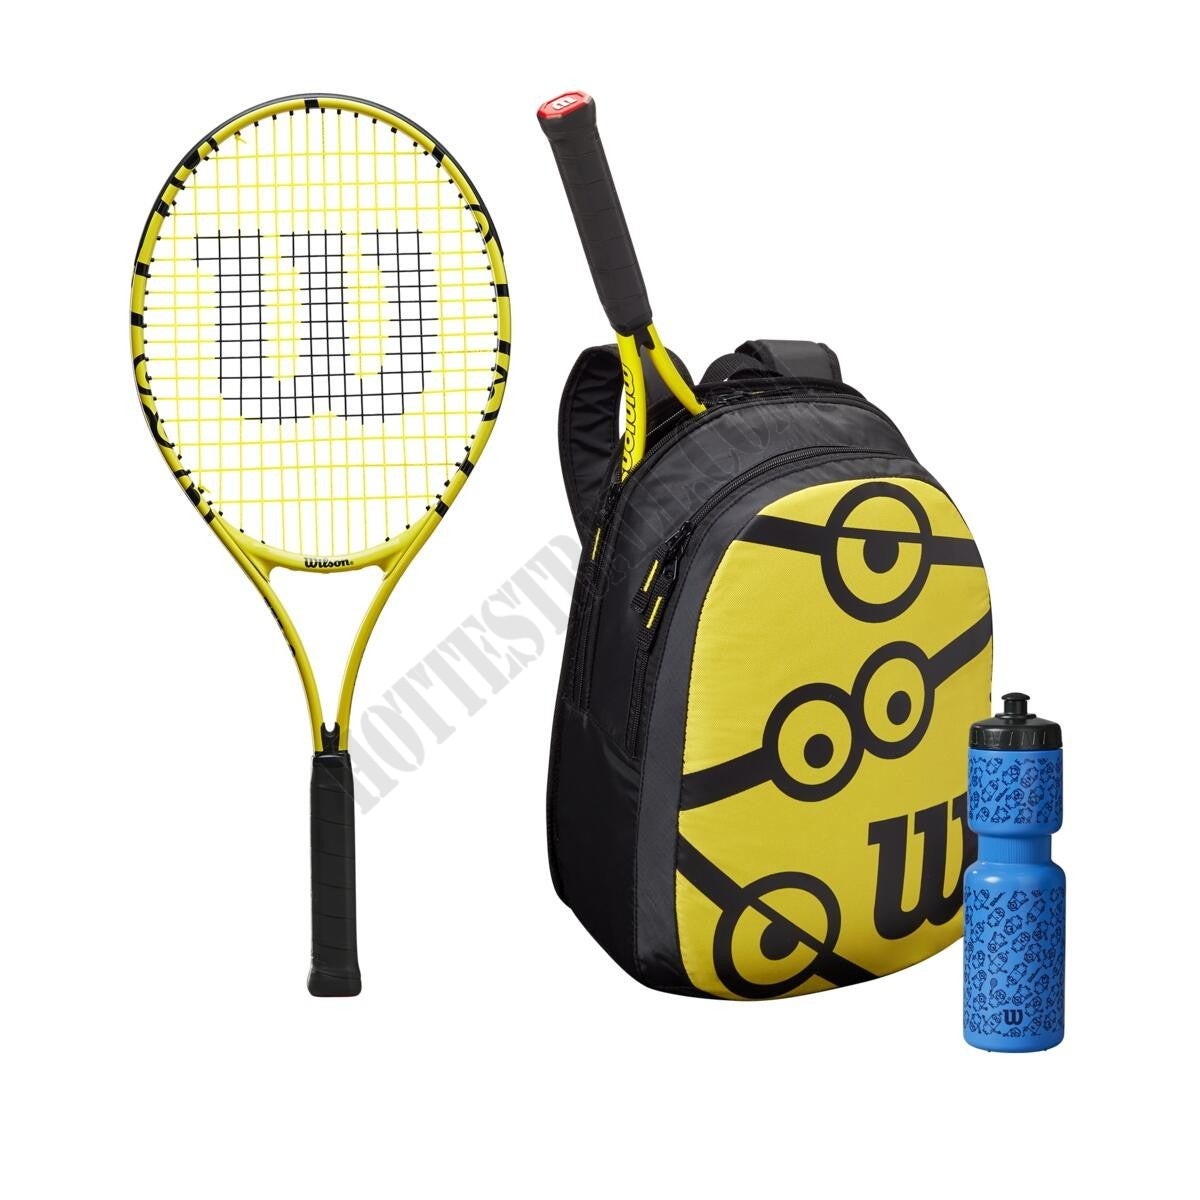 Minions 25 Tennis Racket Kit - Wilson Discount Store - Minions 25 Tennis Racket Kit - Wilson Discount Store